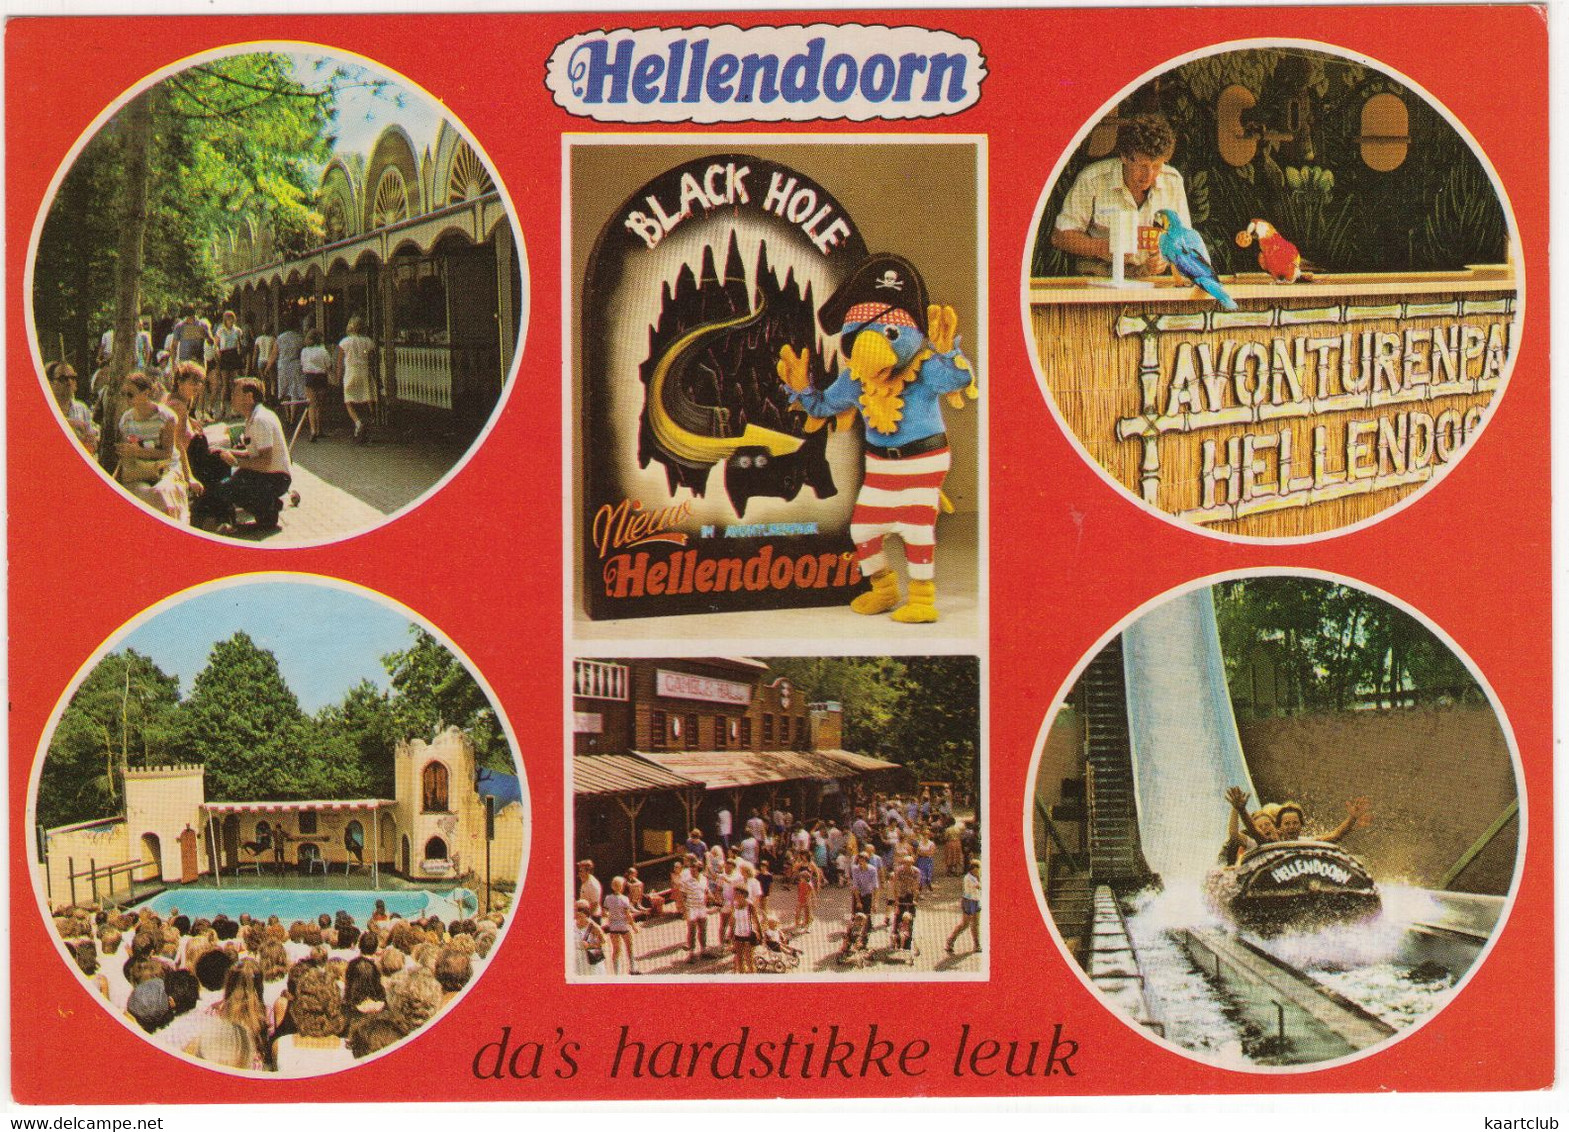 Hellendoorn - Avonturenpark  - (Nederland/Holland)  - O.a. 'Black Hole' - Hellendoorn